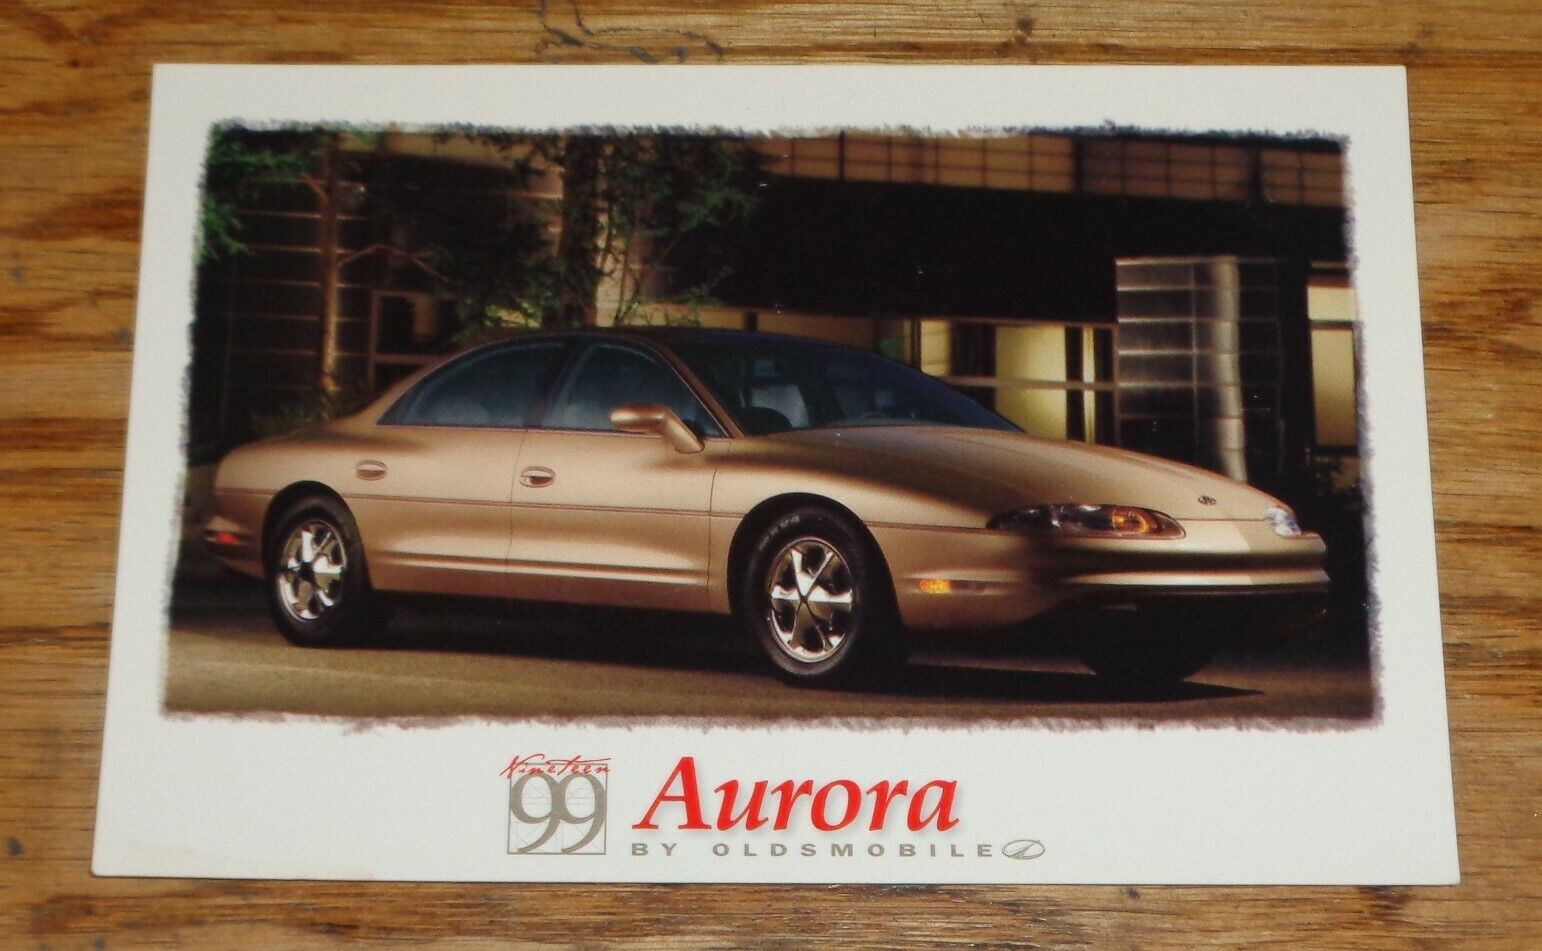 Original 1999 Oldsmobile Aurora Postcard 99 | eBay